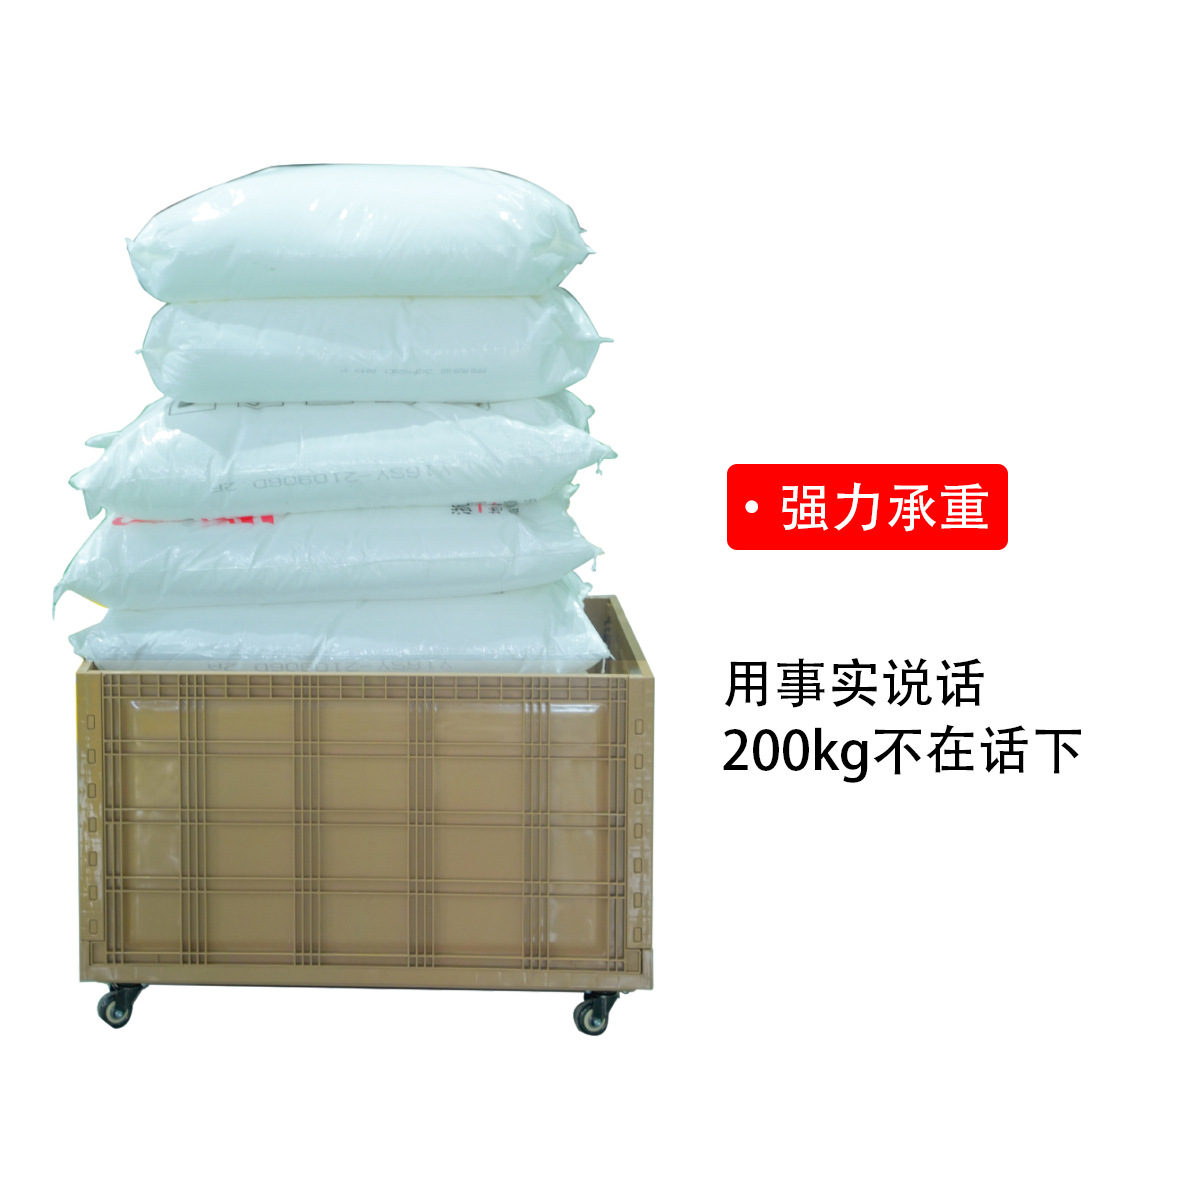 Customized Logistics Turnover Box 8260 Portable Extra Large Plastic Storage Box with Wheels Industrial Logistics Box Basket